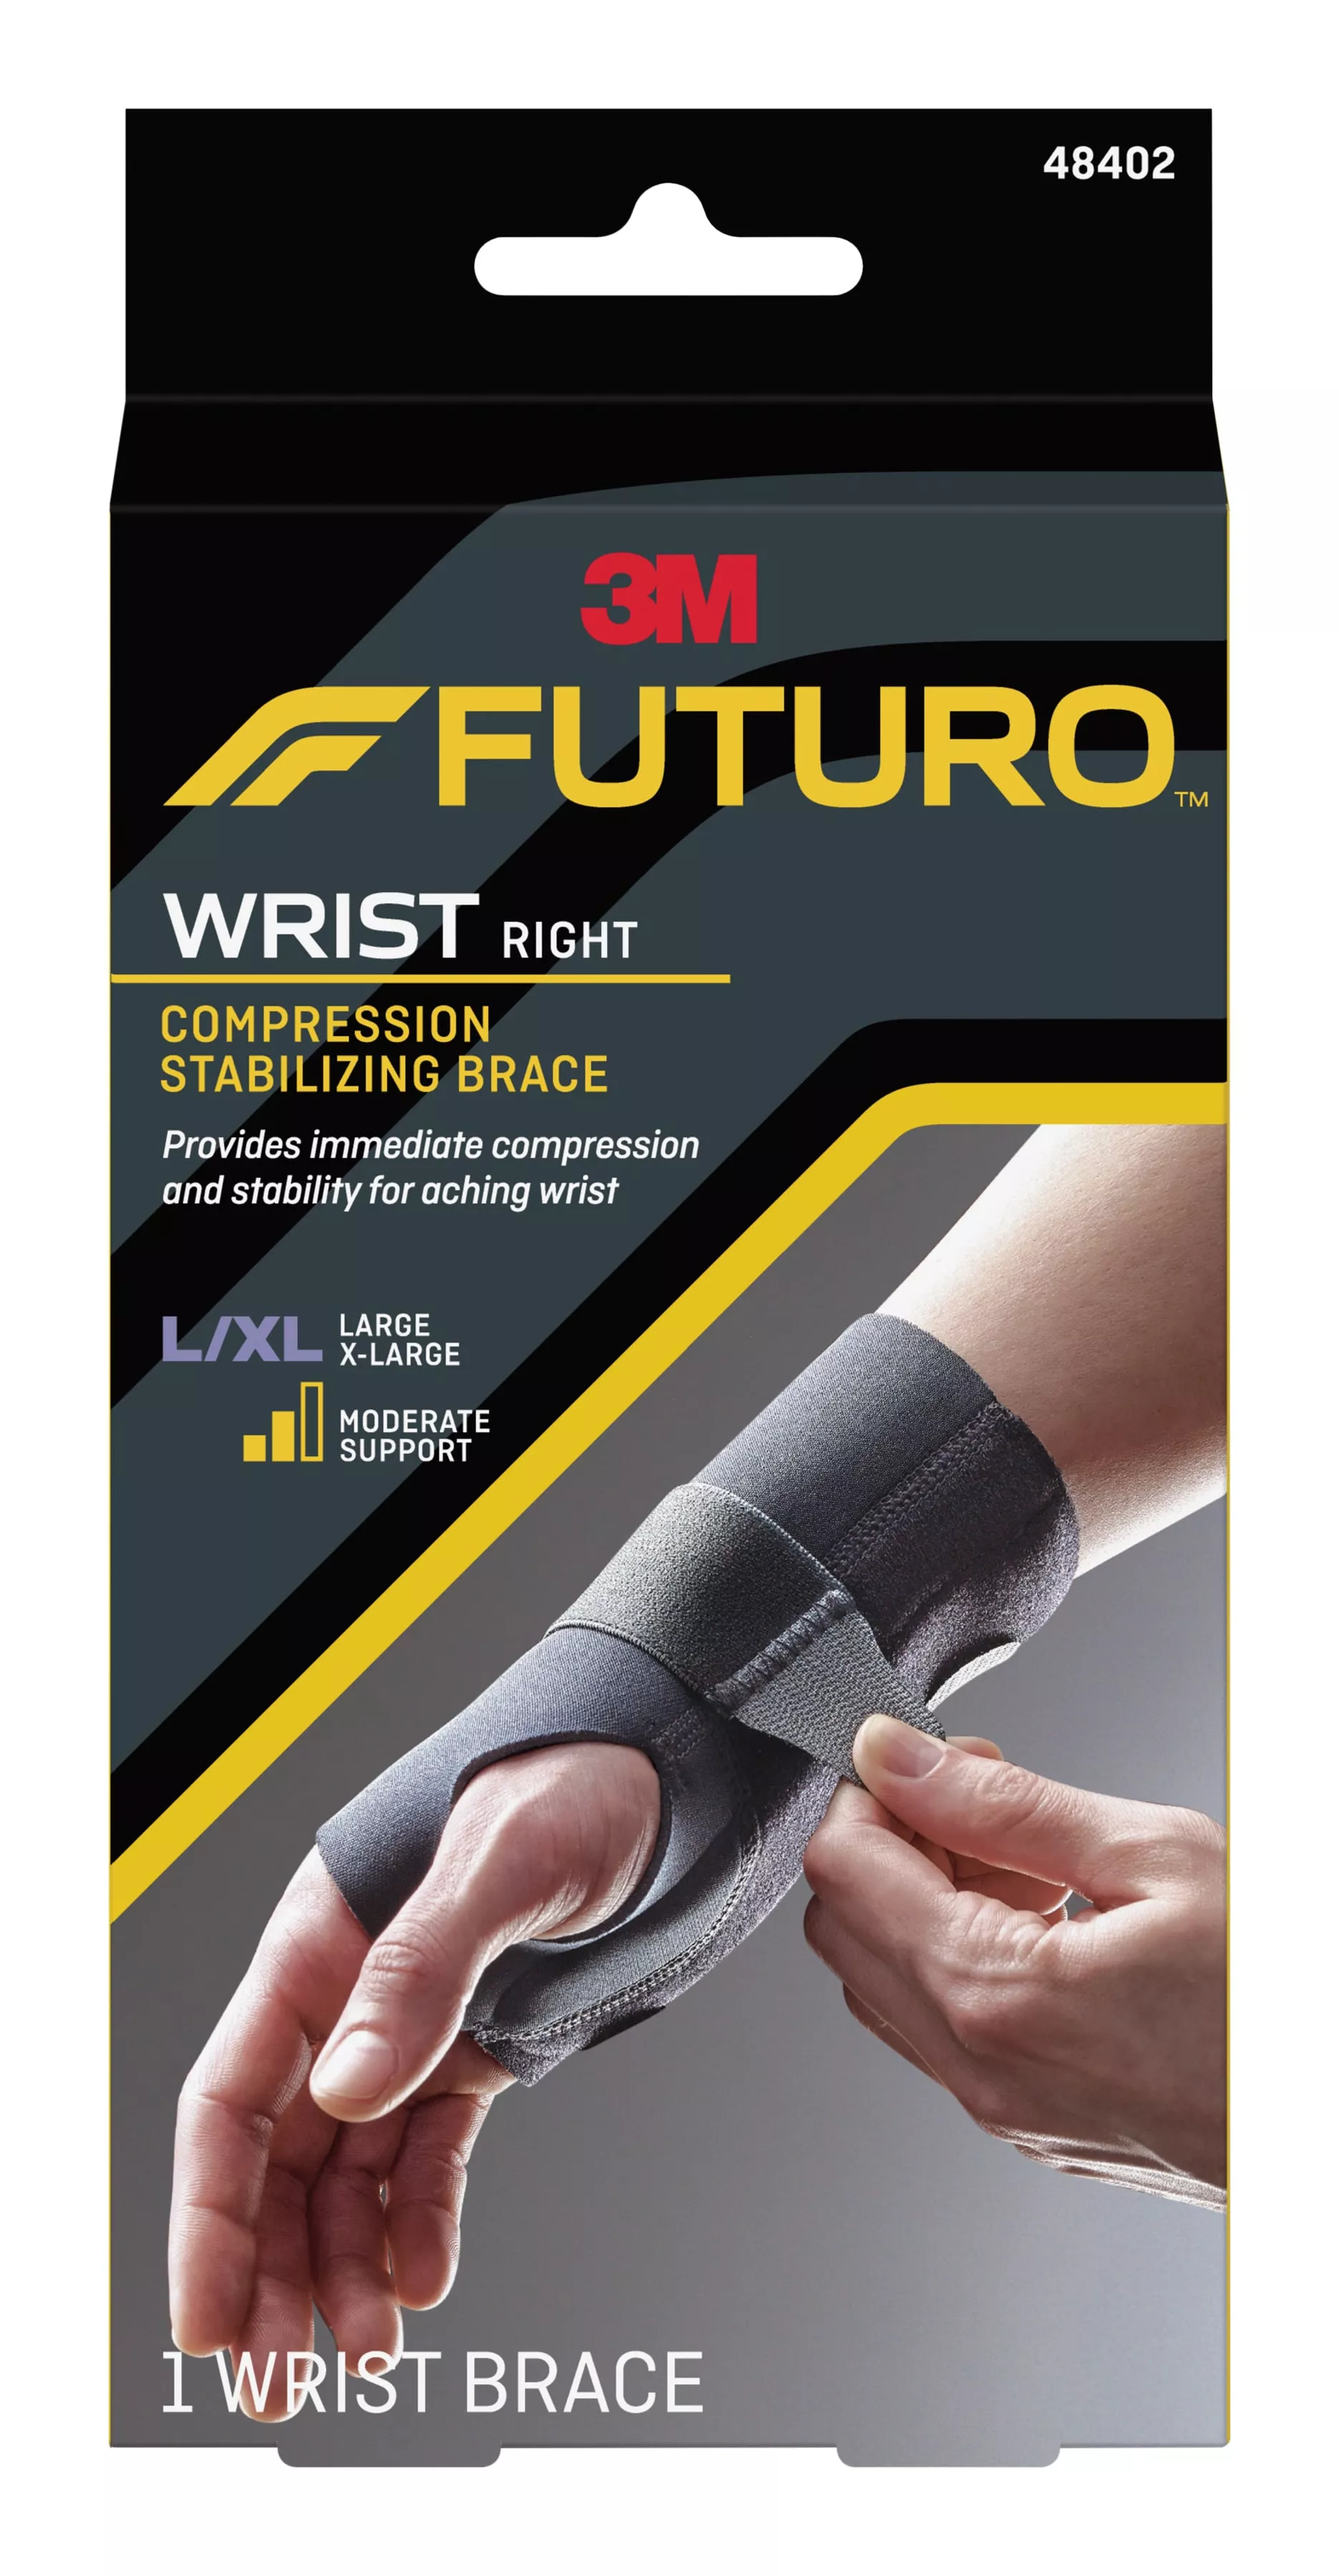 FUTURO™ Compression Stabilizing Wrist Brace, 48402ENR, Right Hand,
Large/Extra-Large